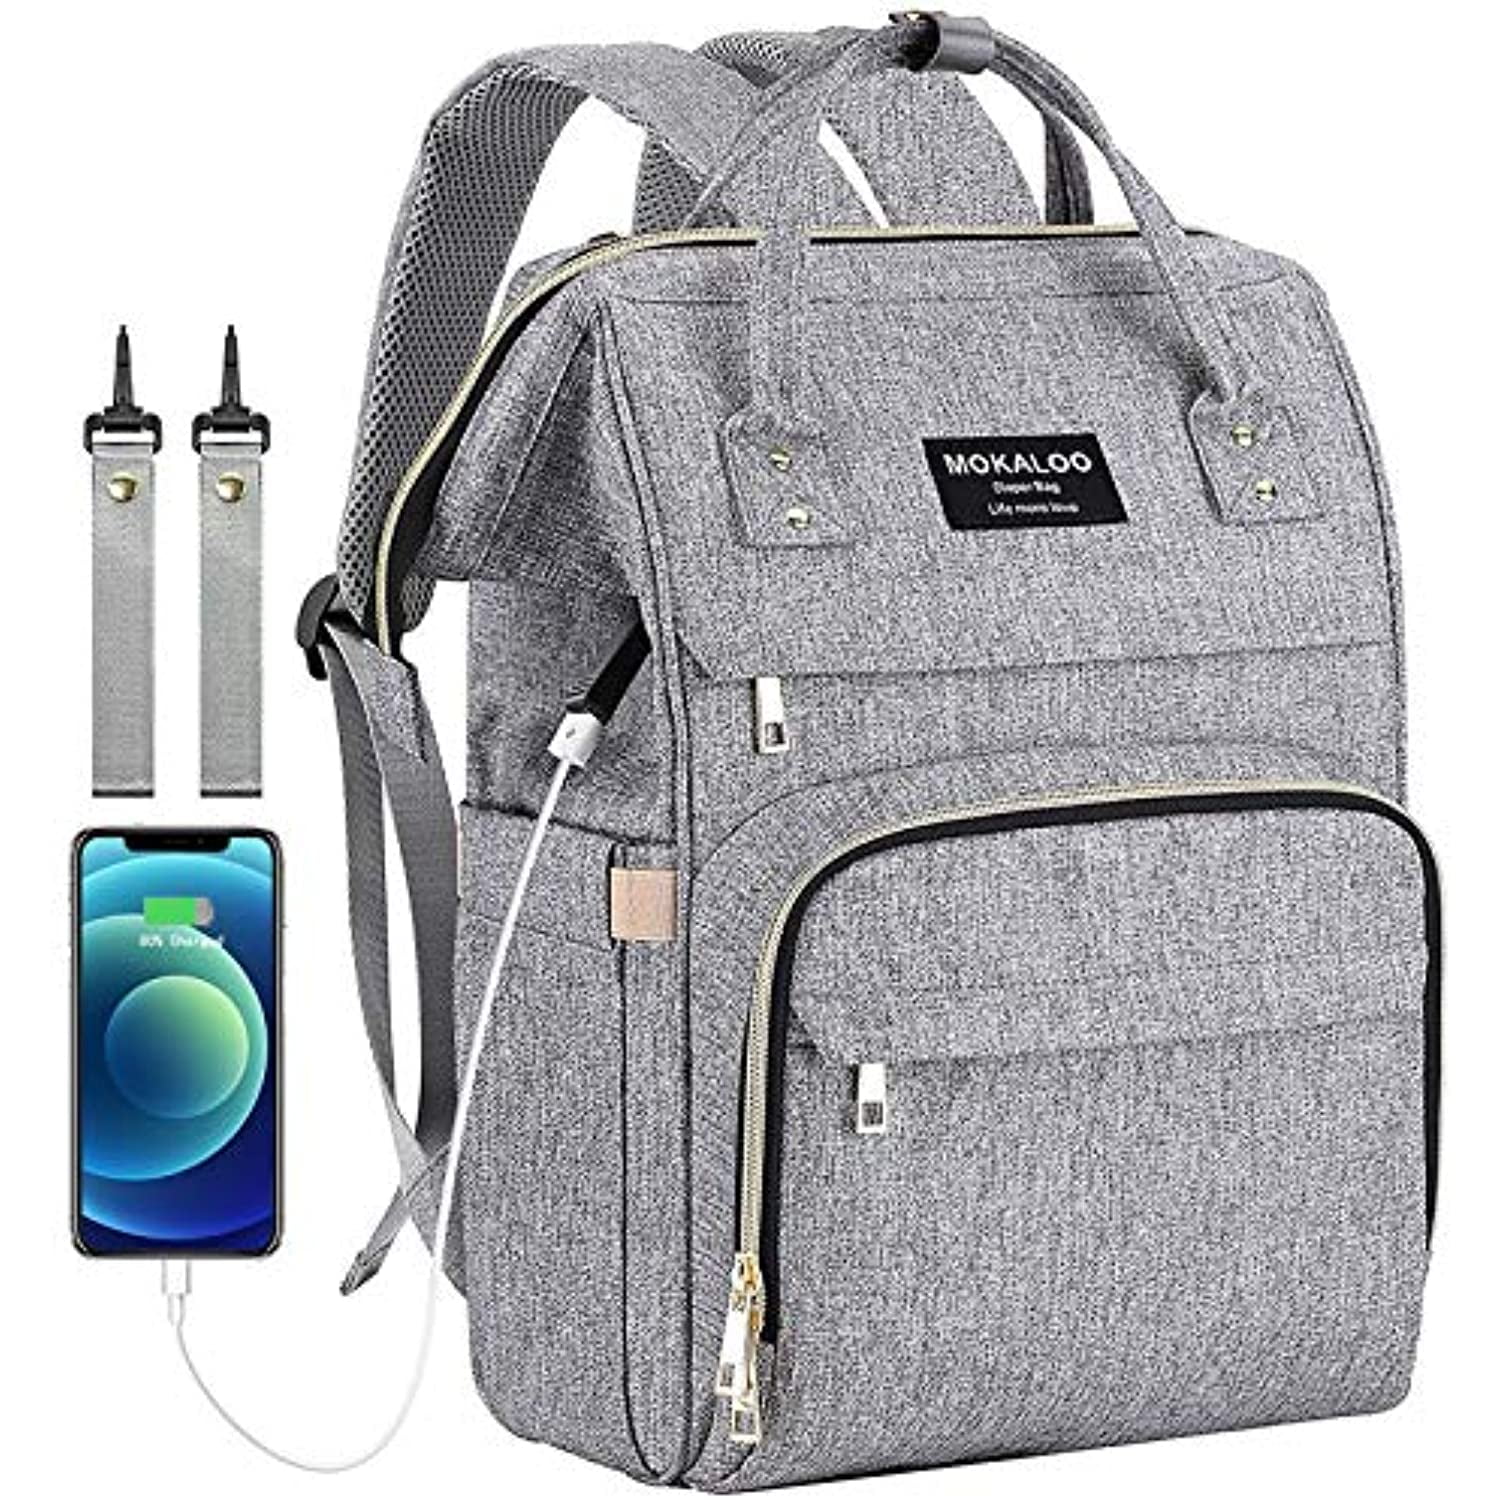 Multifunctional Backpack Large Capacity Backpack